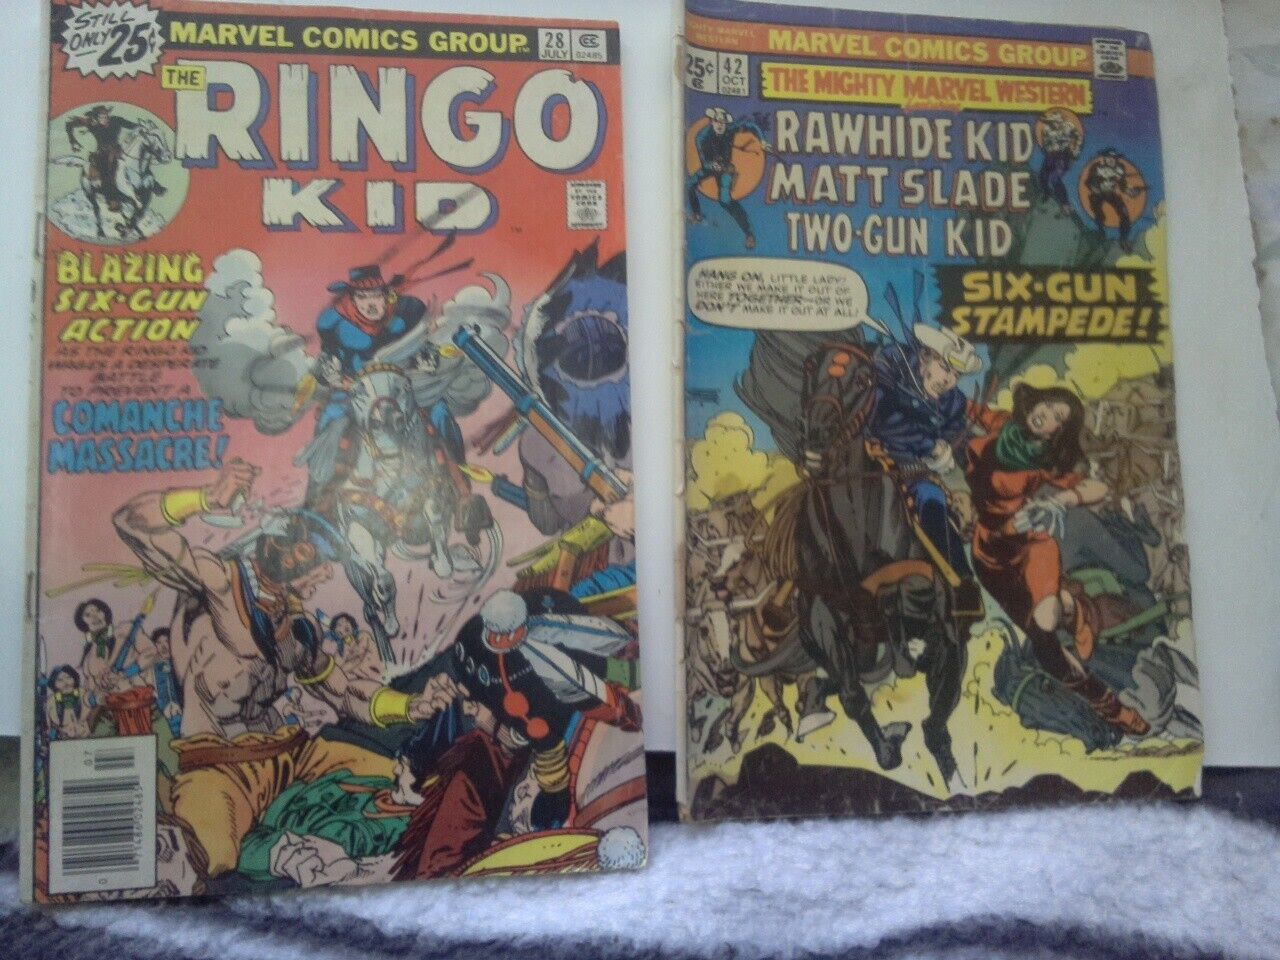 Ringo Kid #28 1976 Mighty Marvel Western #42 1975 Marvel Comics Western Lot of 2